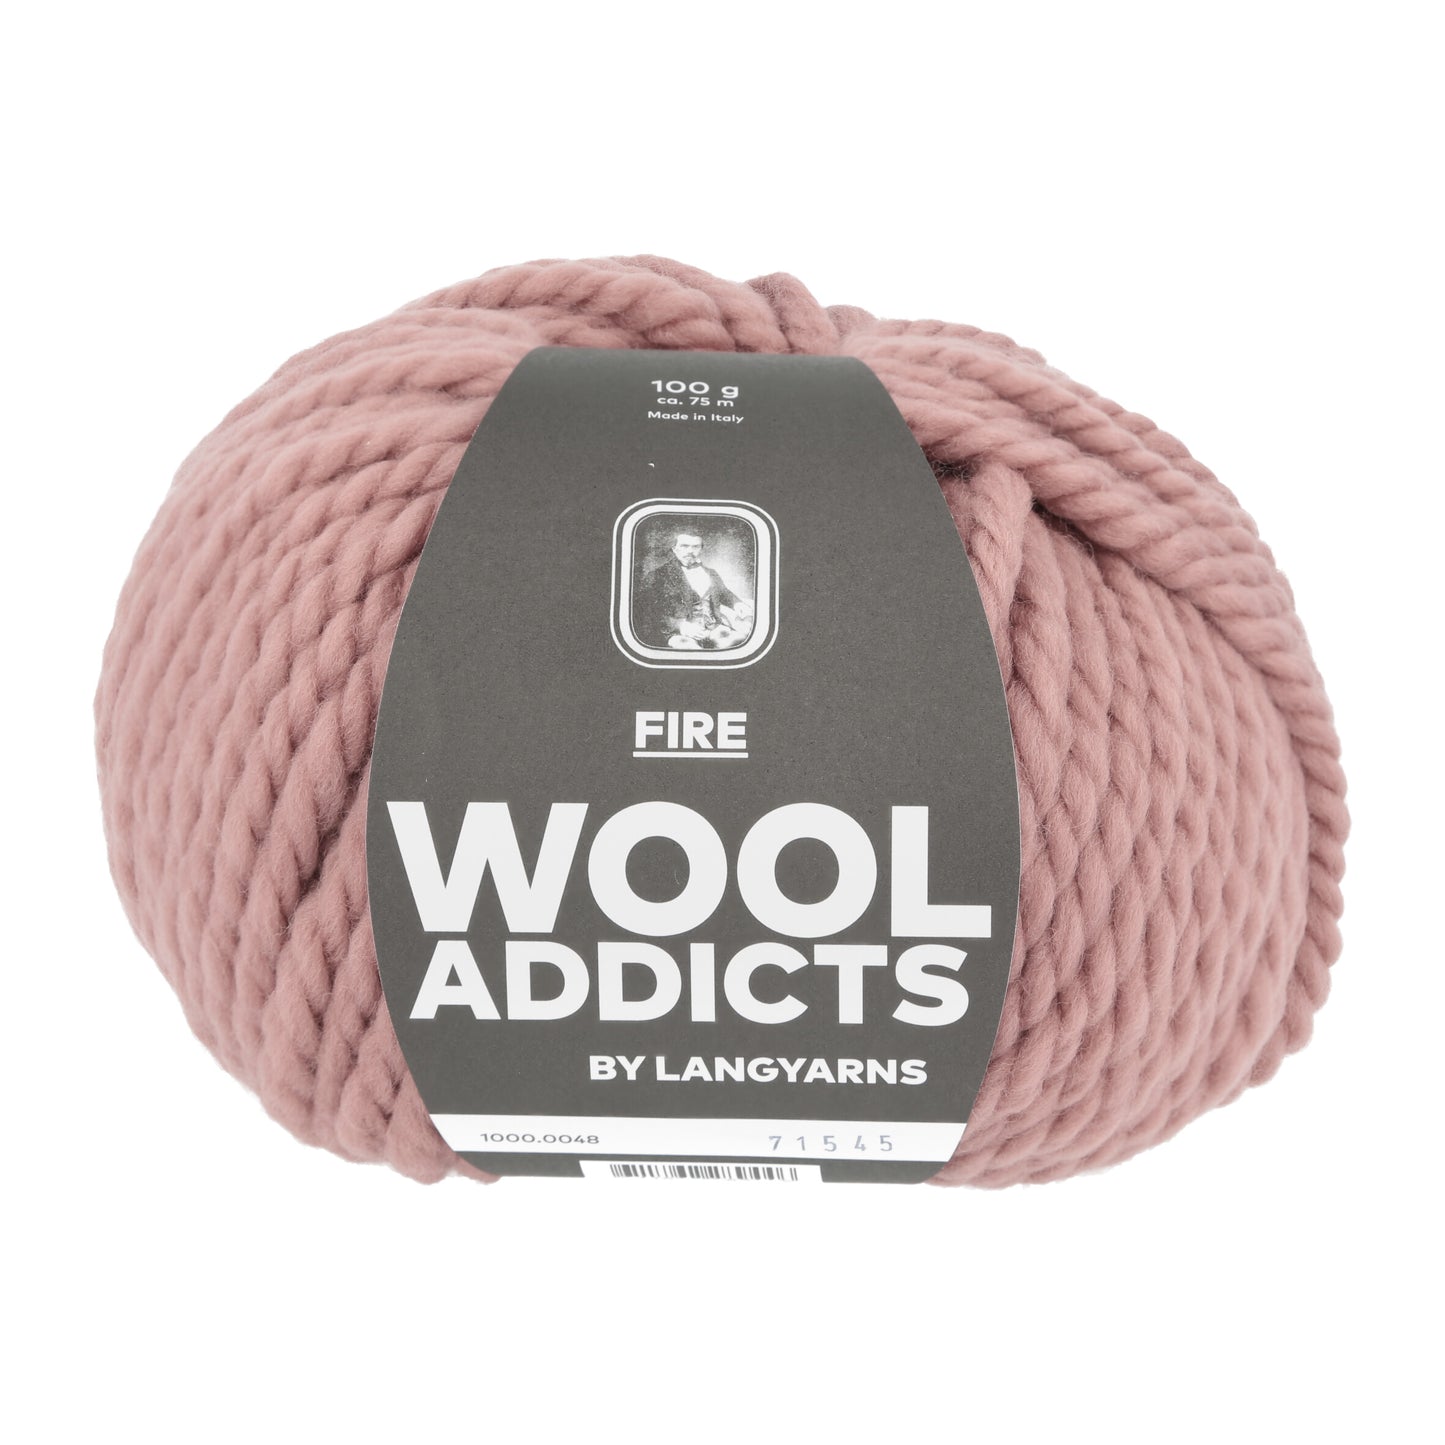 Wooladdicts fire